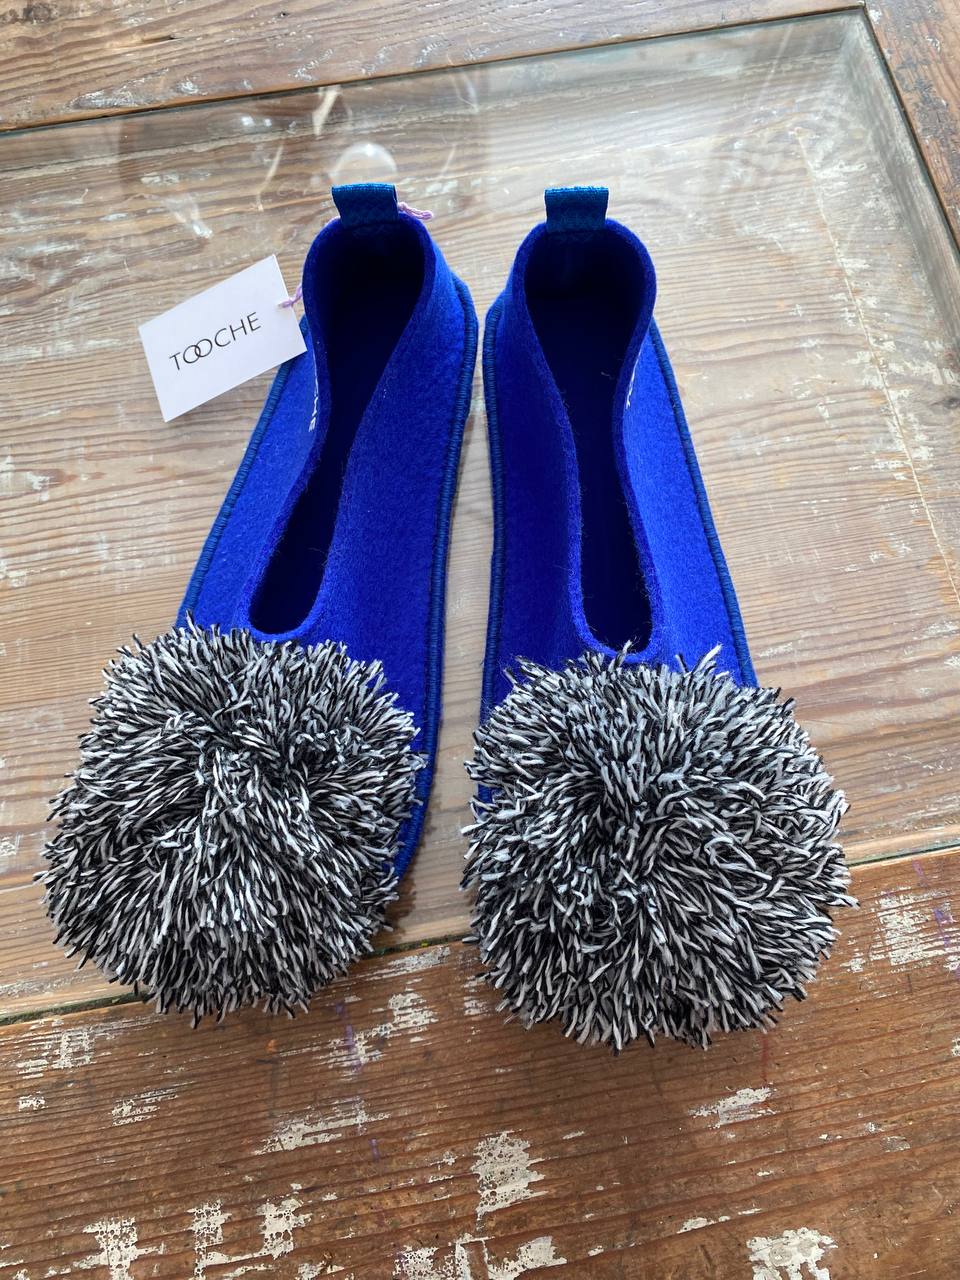 BLUE CHIA vegan slippers